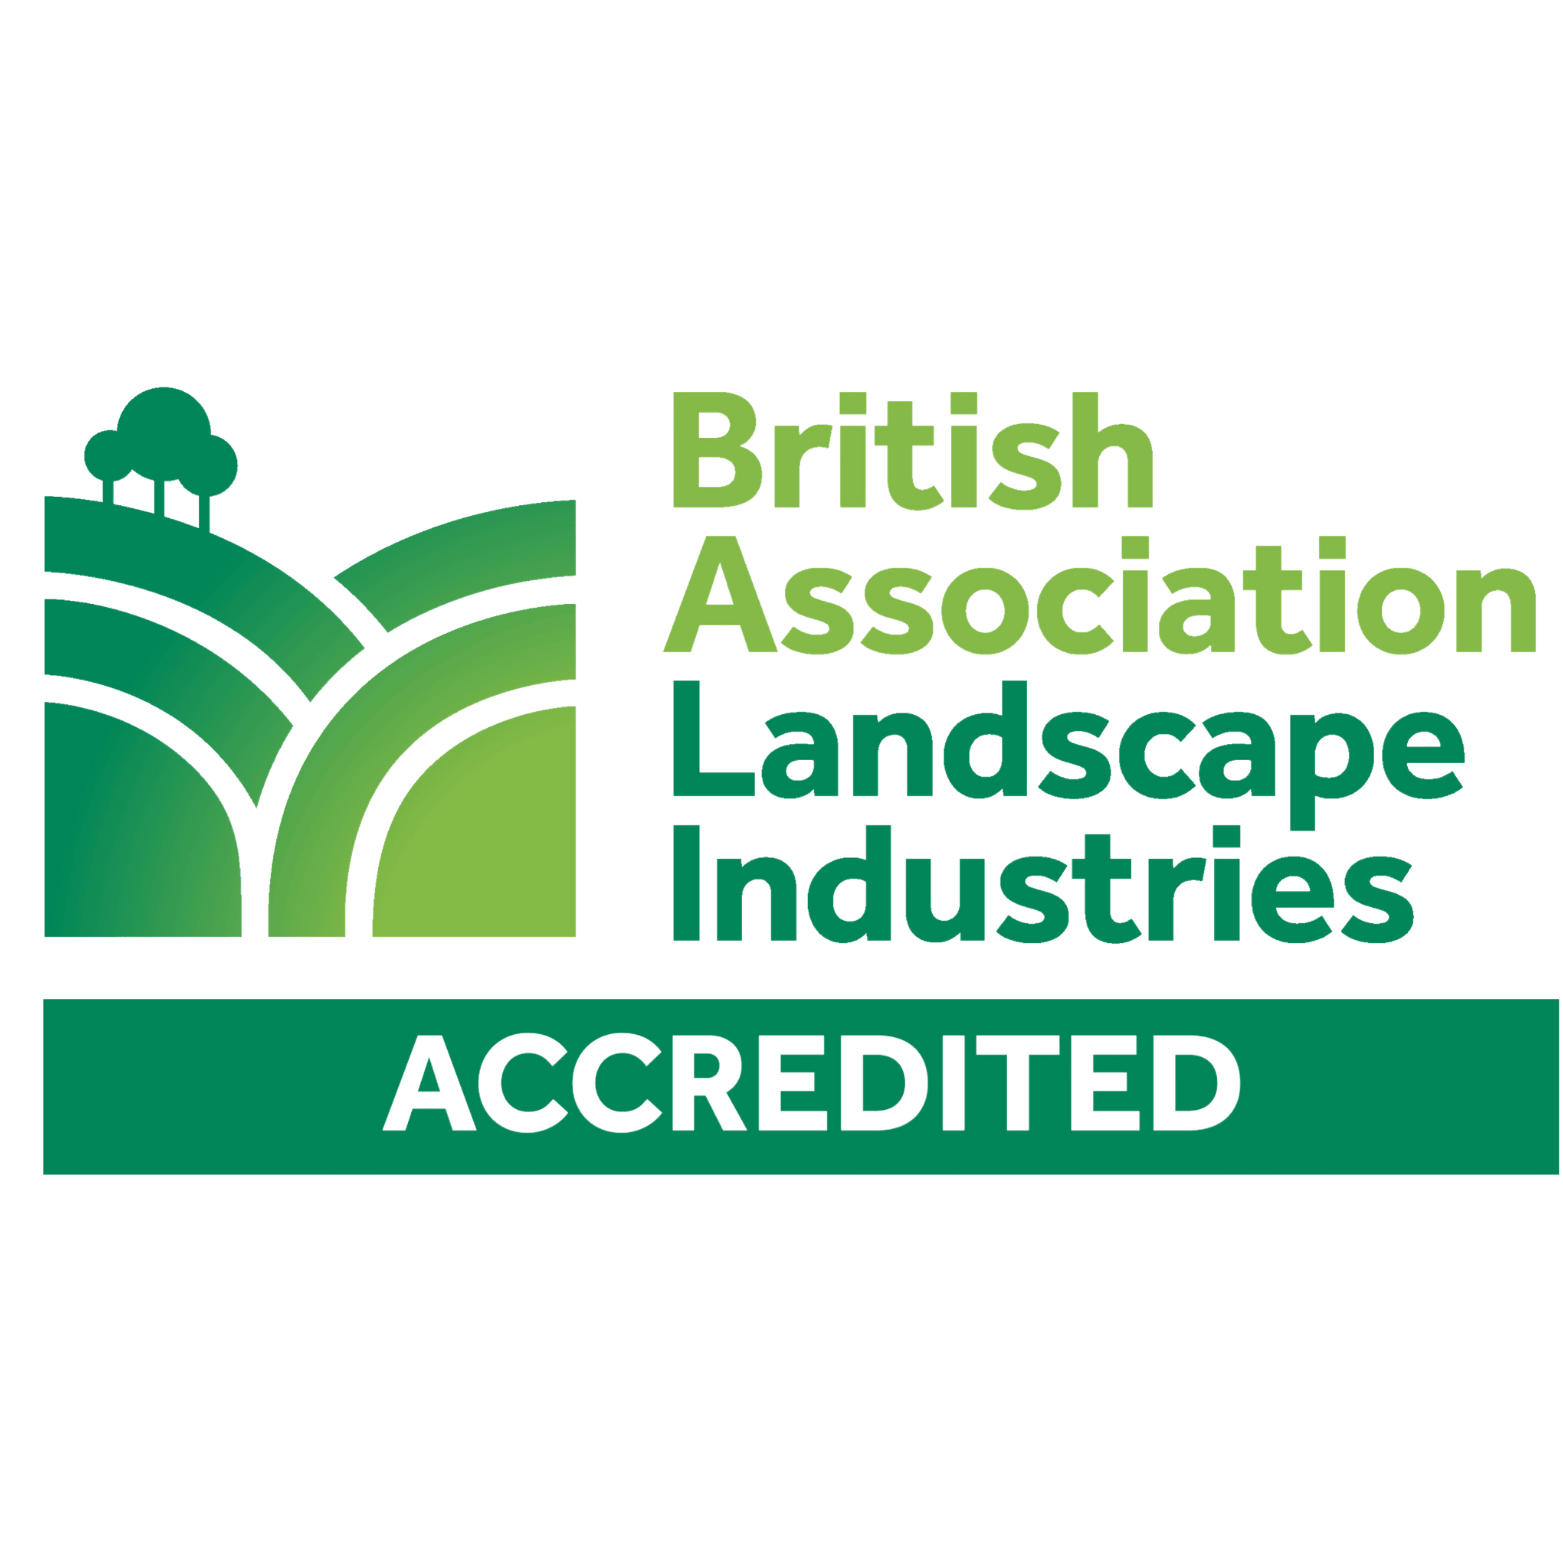 British Association Landscape Industries